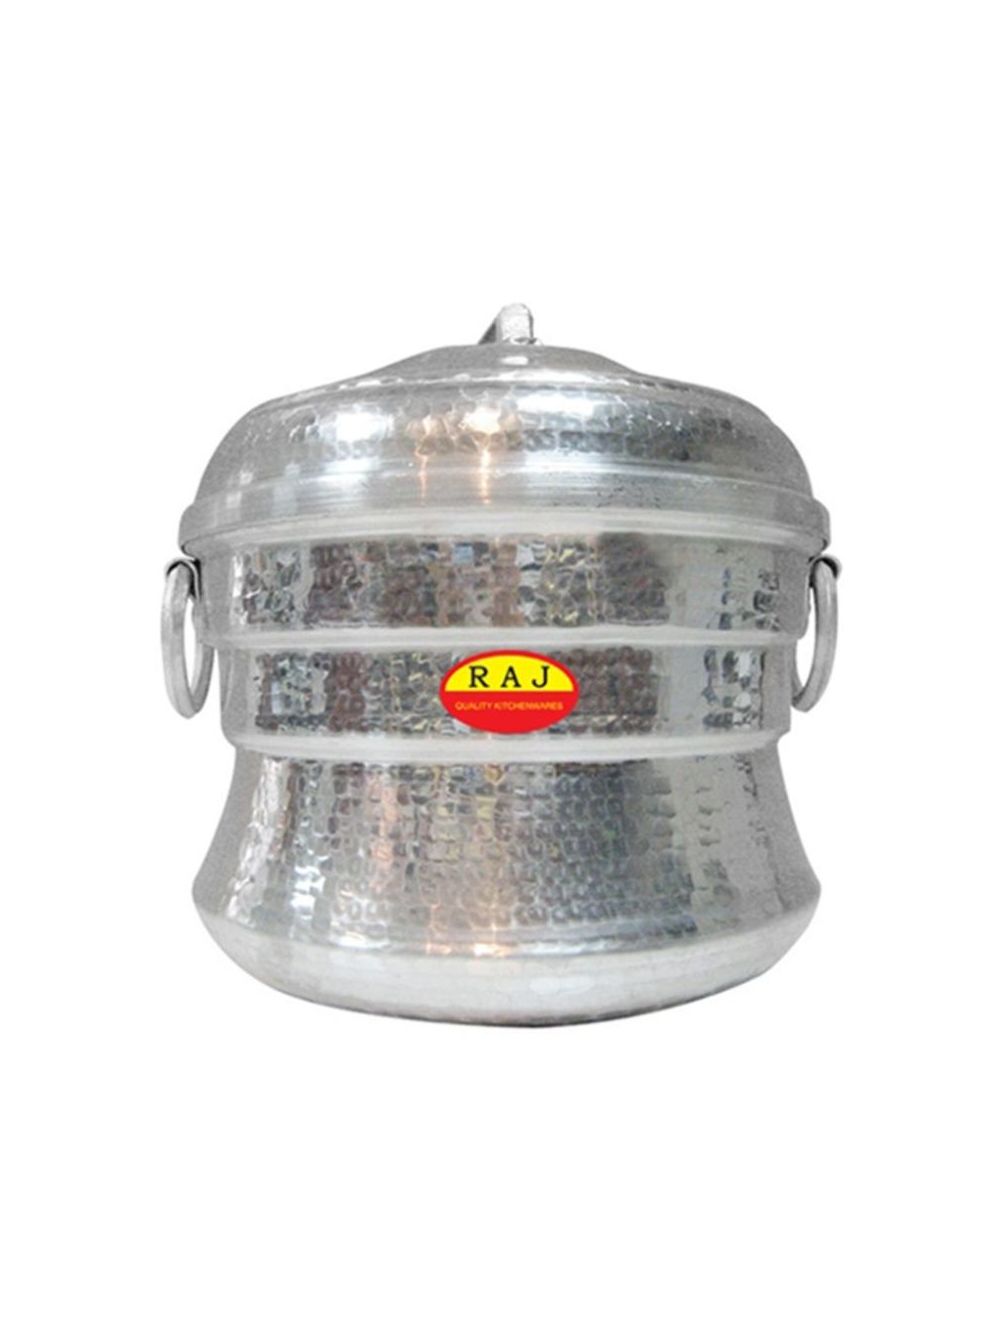 RAJ Aluminium Idly Pot, Silver, 39 IDLI